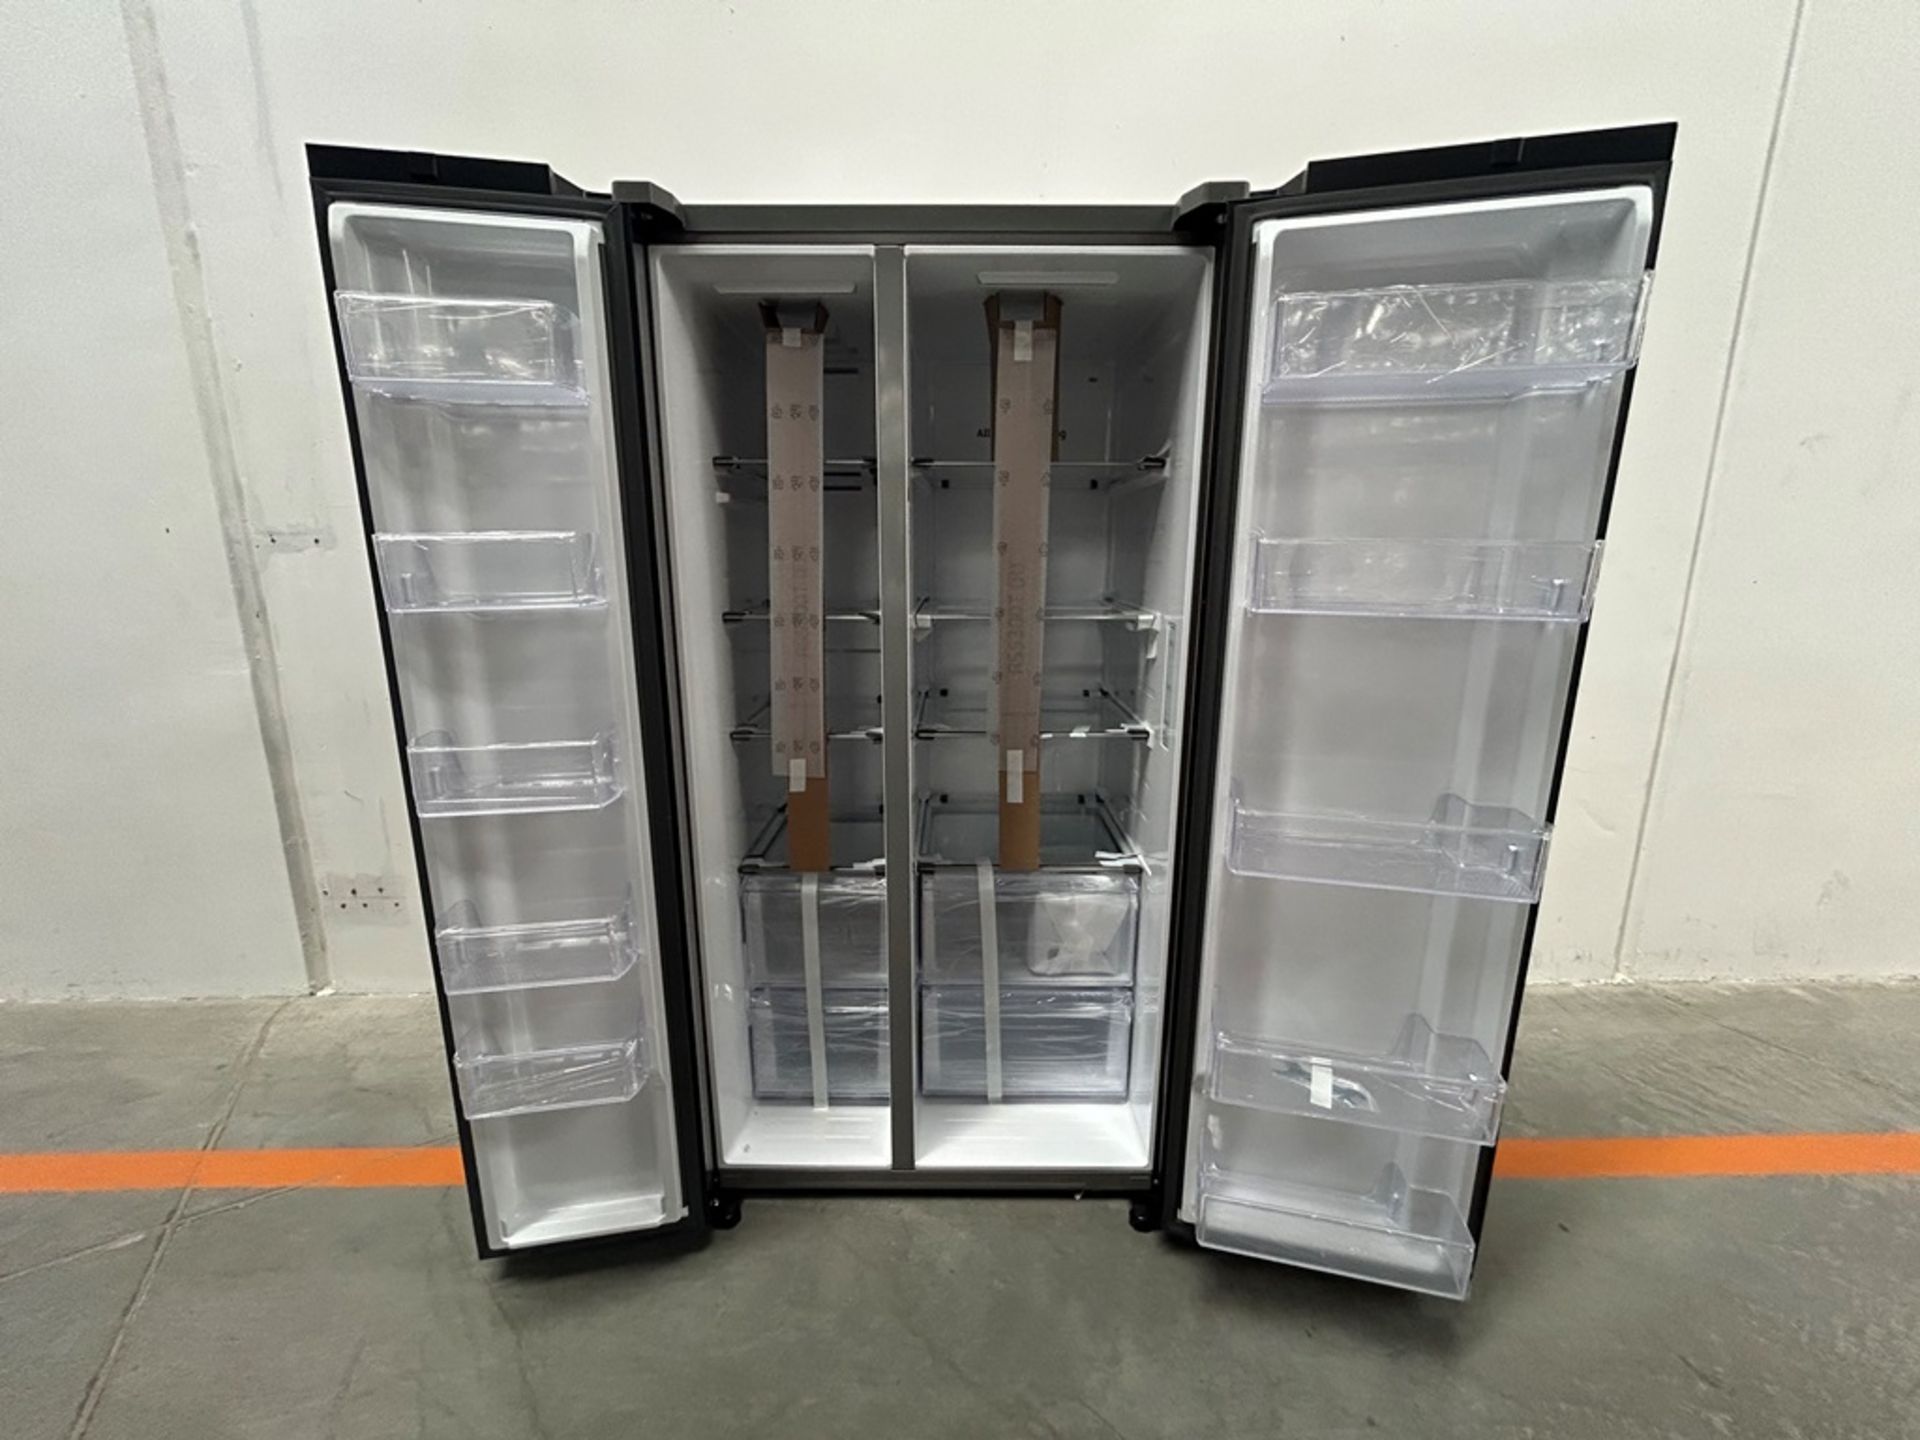 (NUEVO) Refrigerador Marca SAMSUNG, Modelo RS28CB70NAQL, Serie 100583, Color GRIS - Image 4 of 10